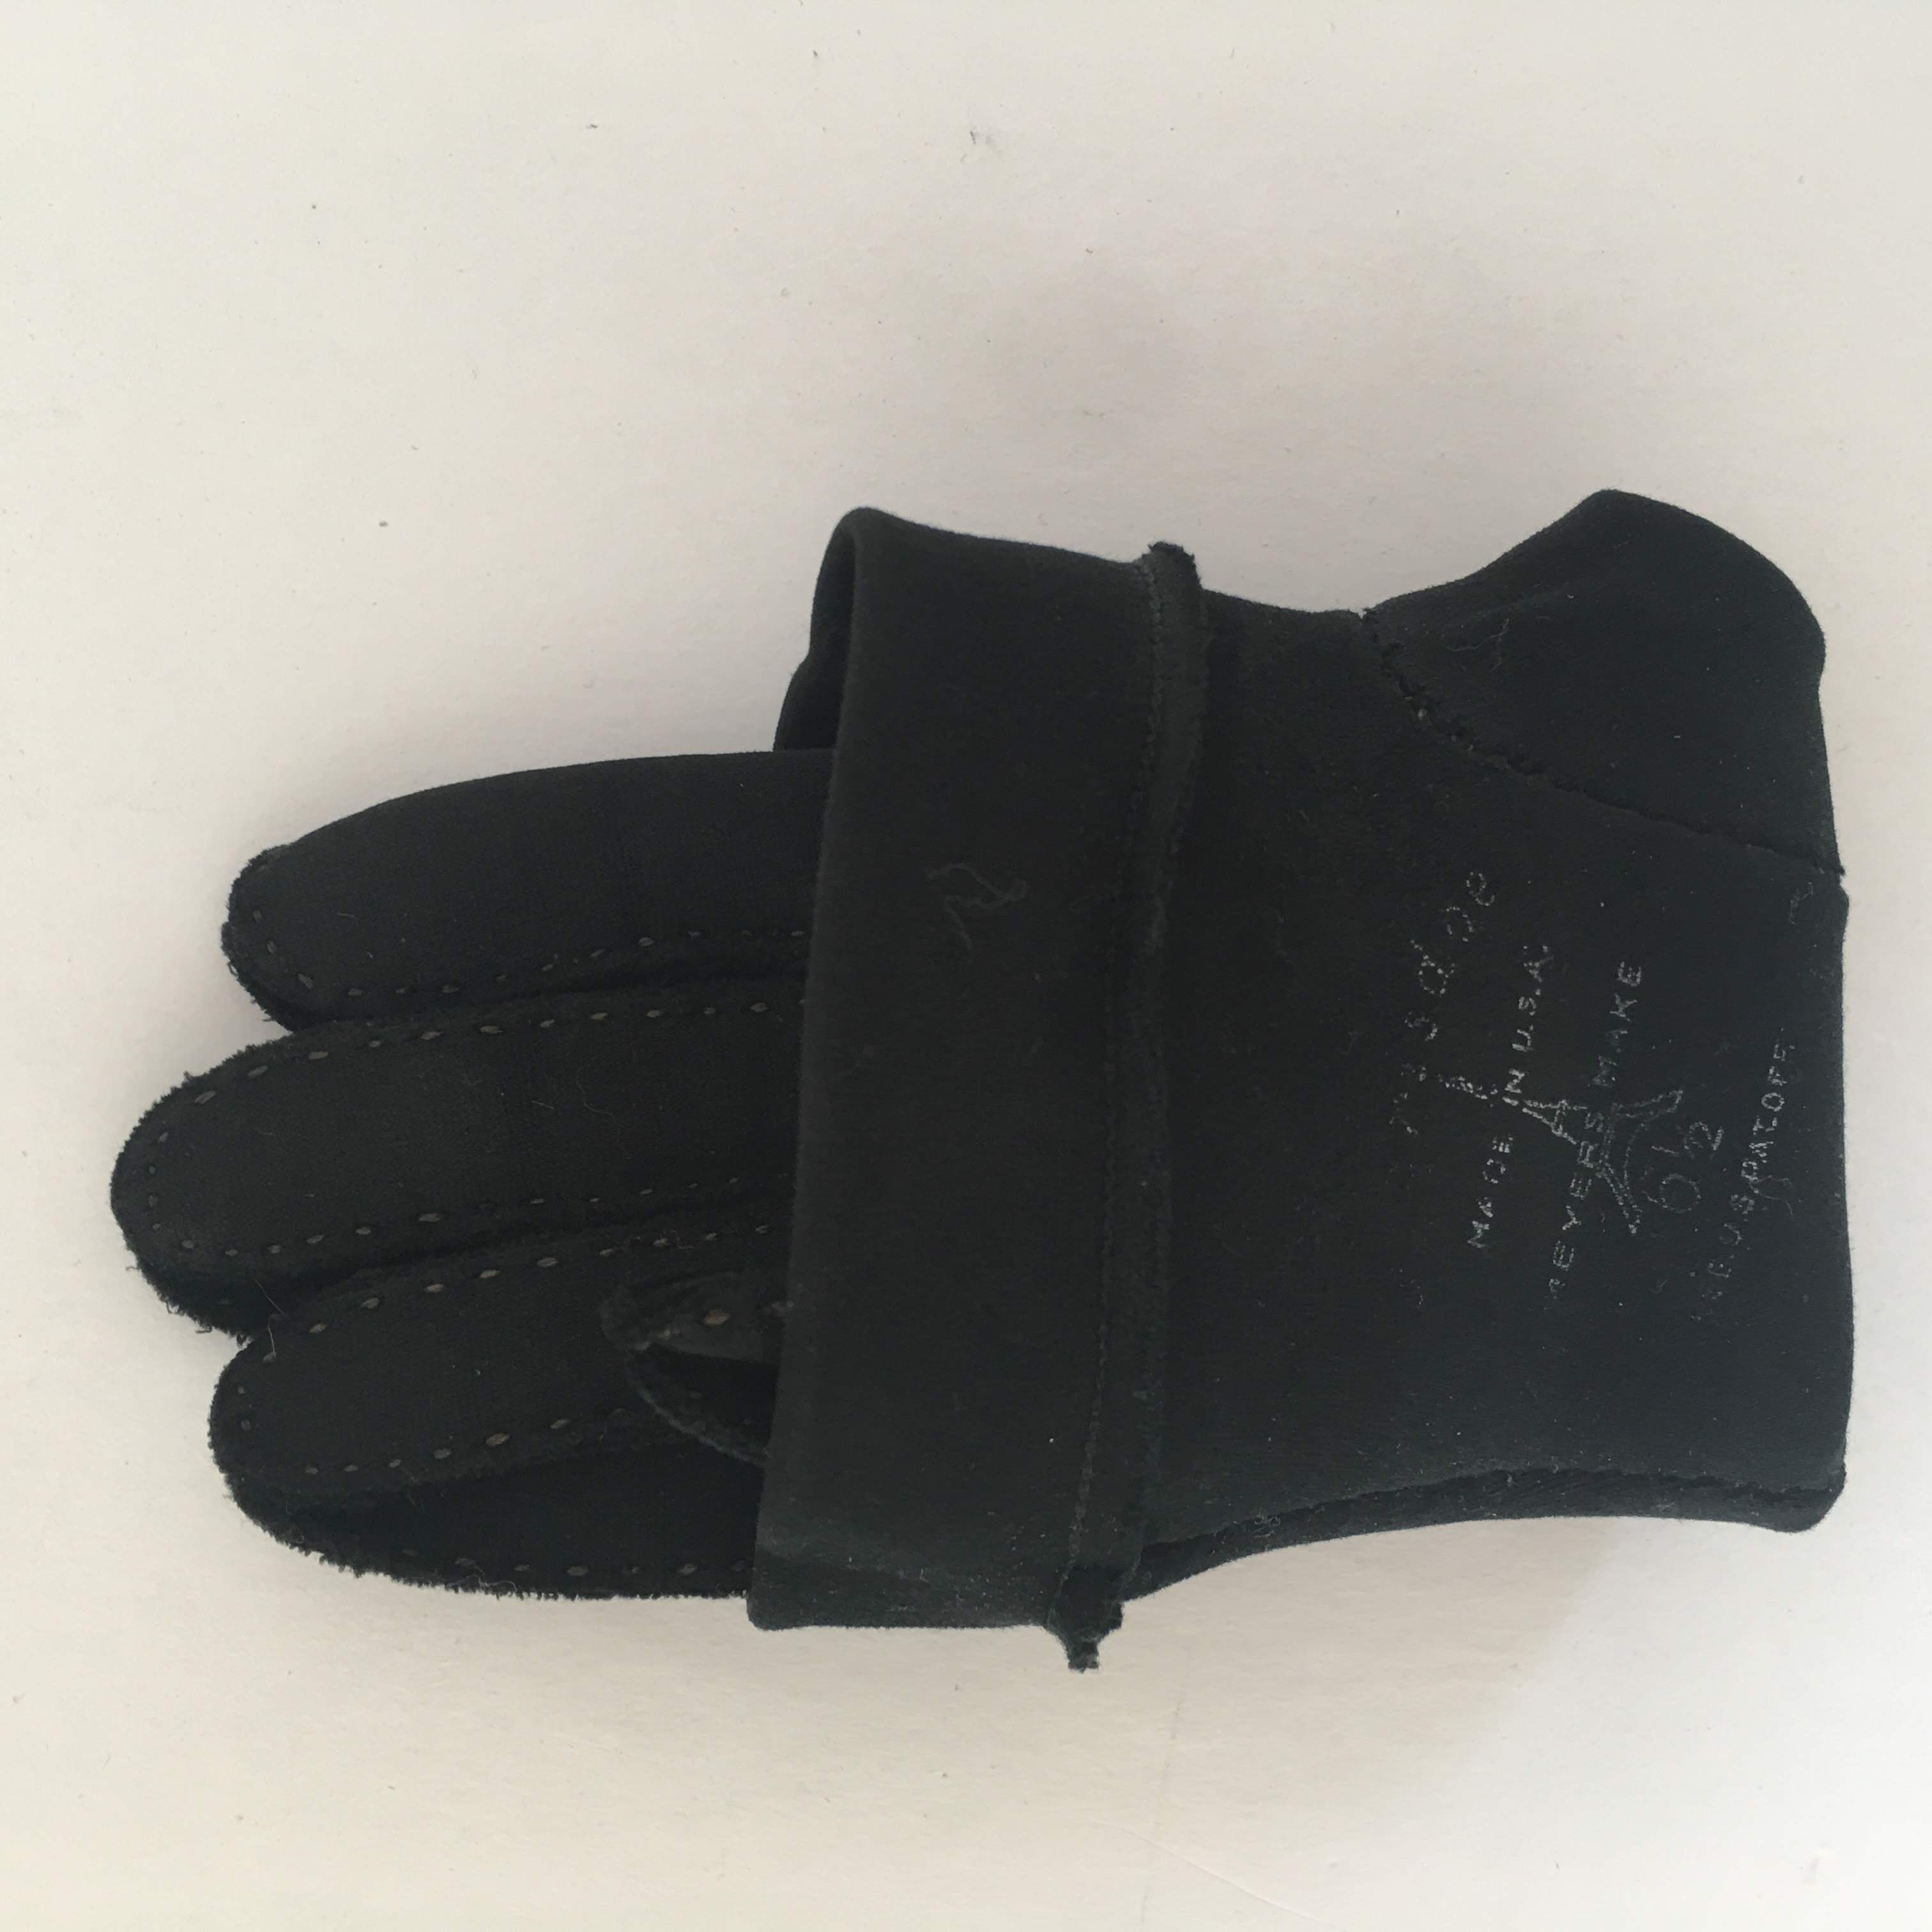 Black Gloves with Rhinestones Vintage Accessory